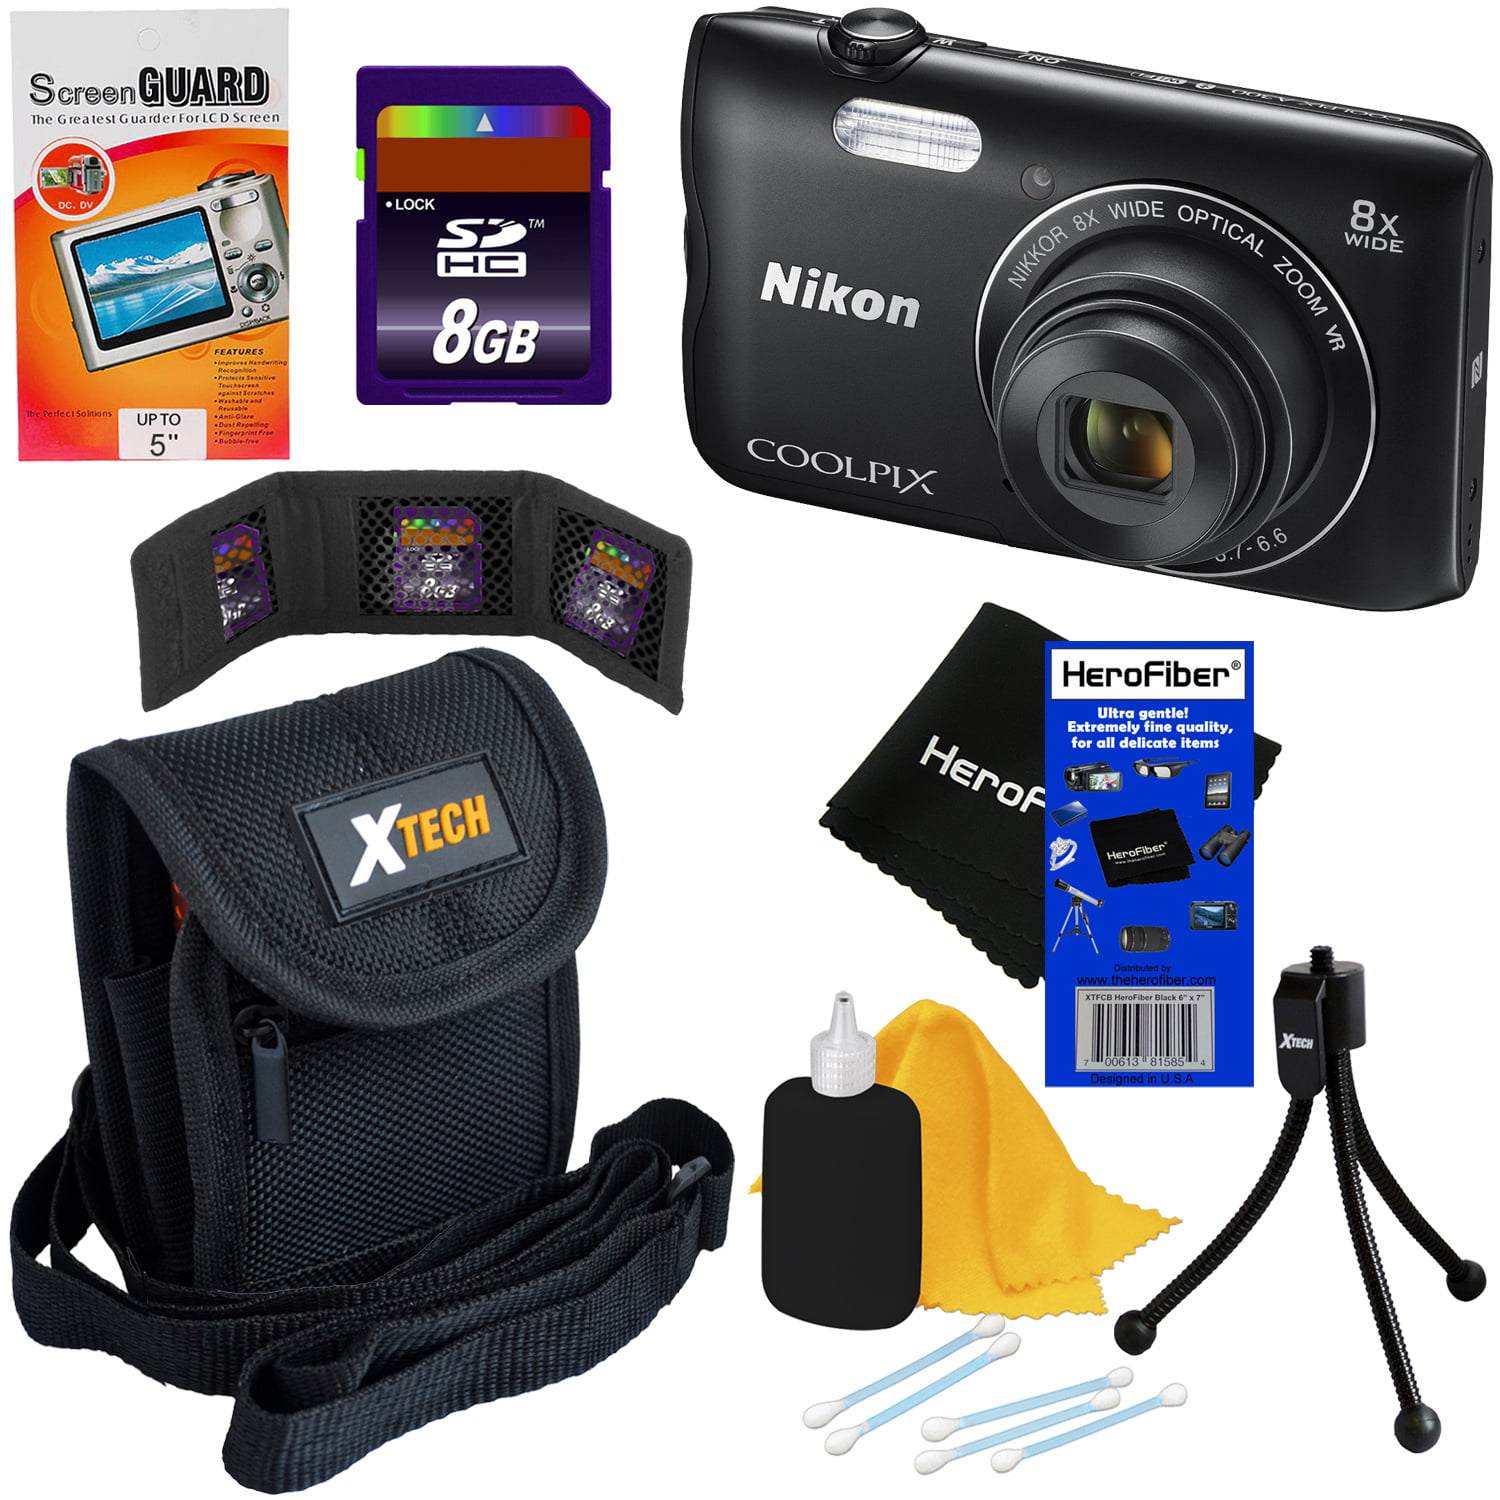 Nikon COOLPIX A300 20.1 MP Digital Camera with 8x Zoom NIKKOR Lens 